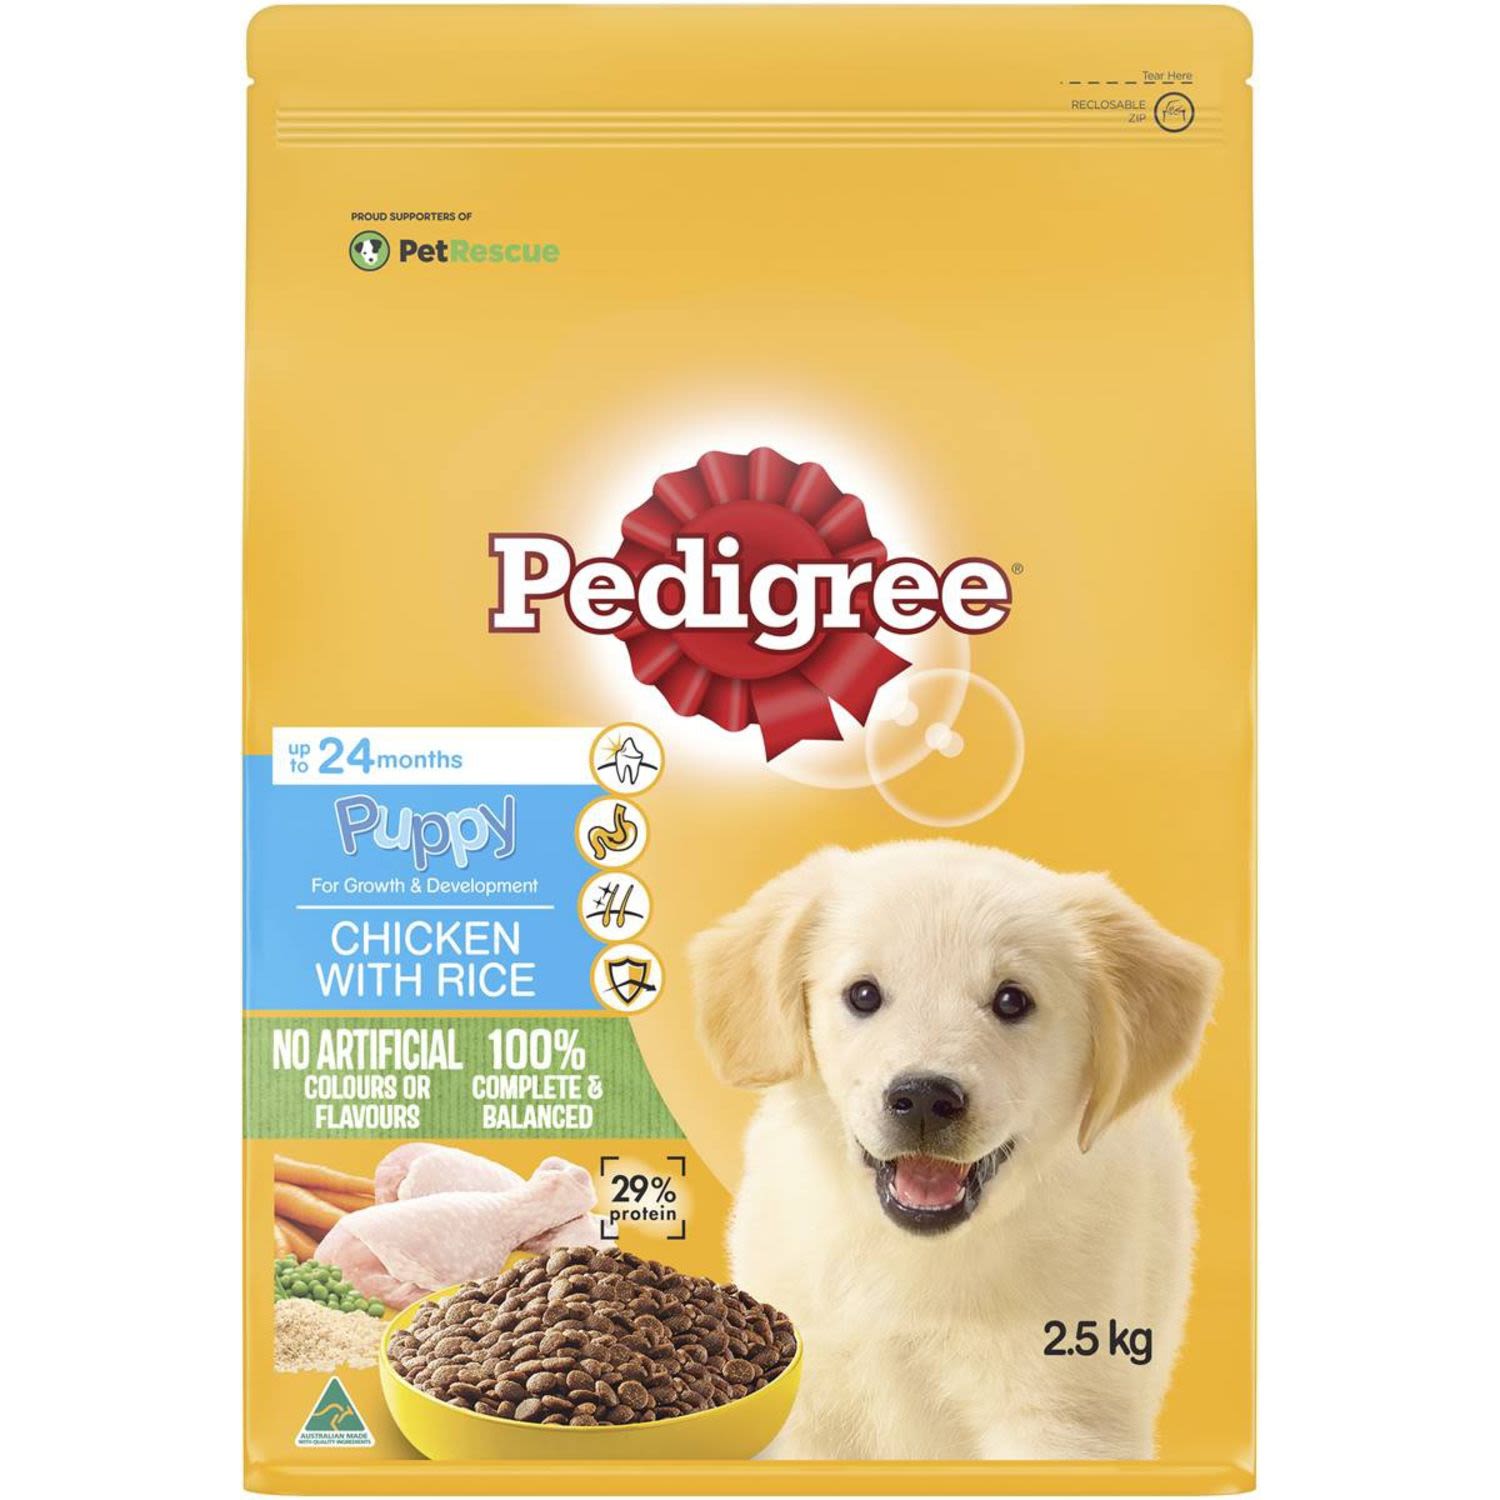 Pedigree Puppy With Chicken & Rice Dry Dog Food, 2.5 Kilogram